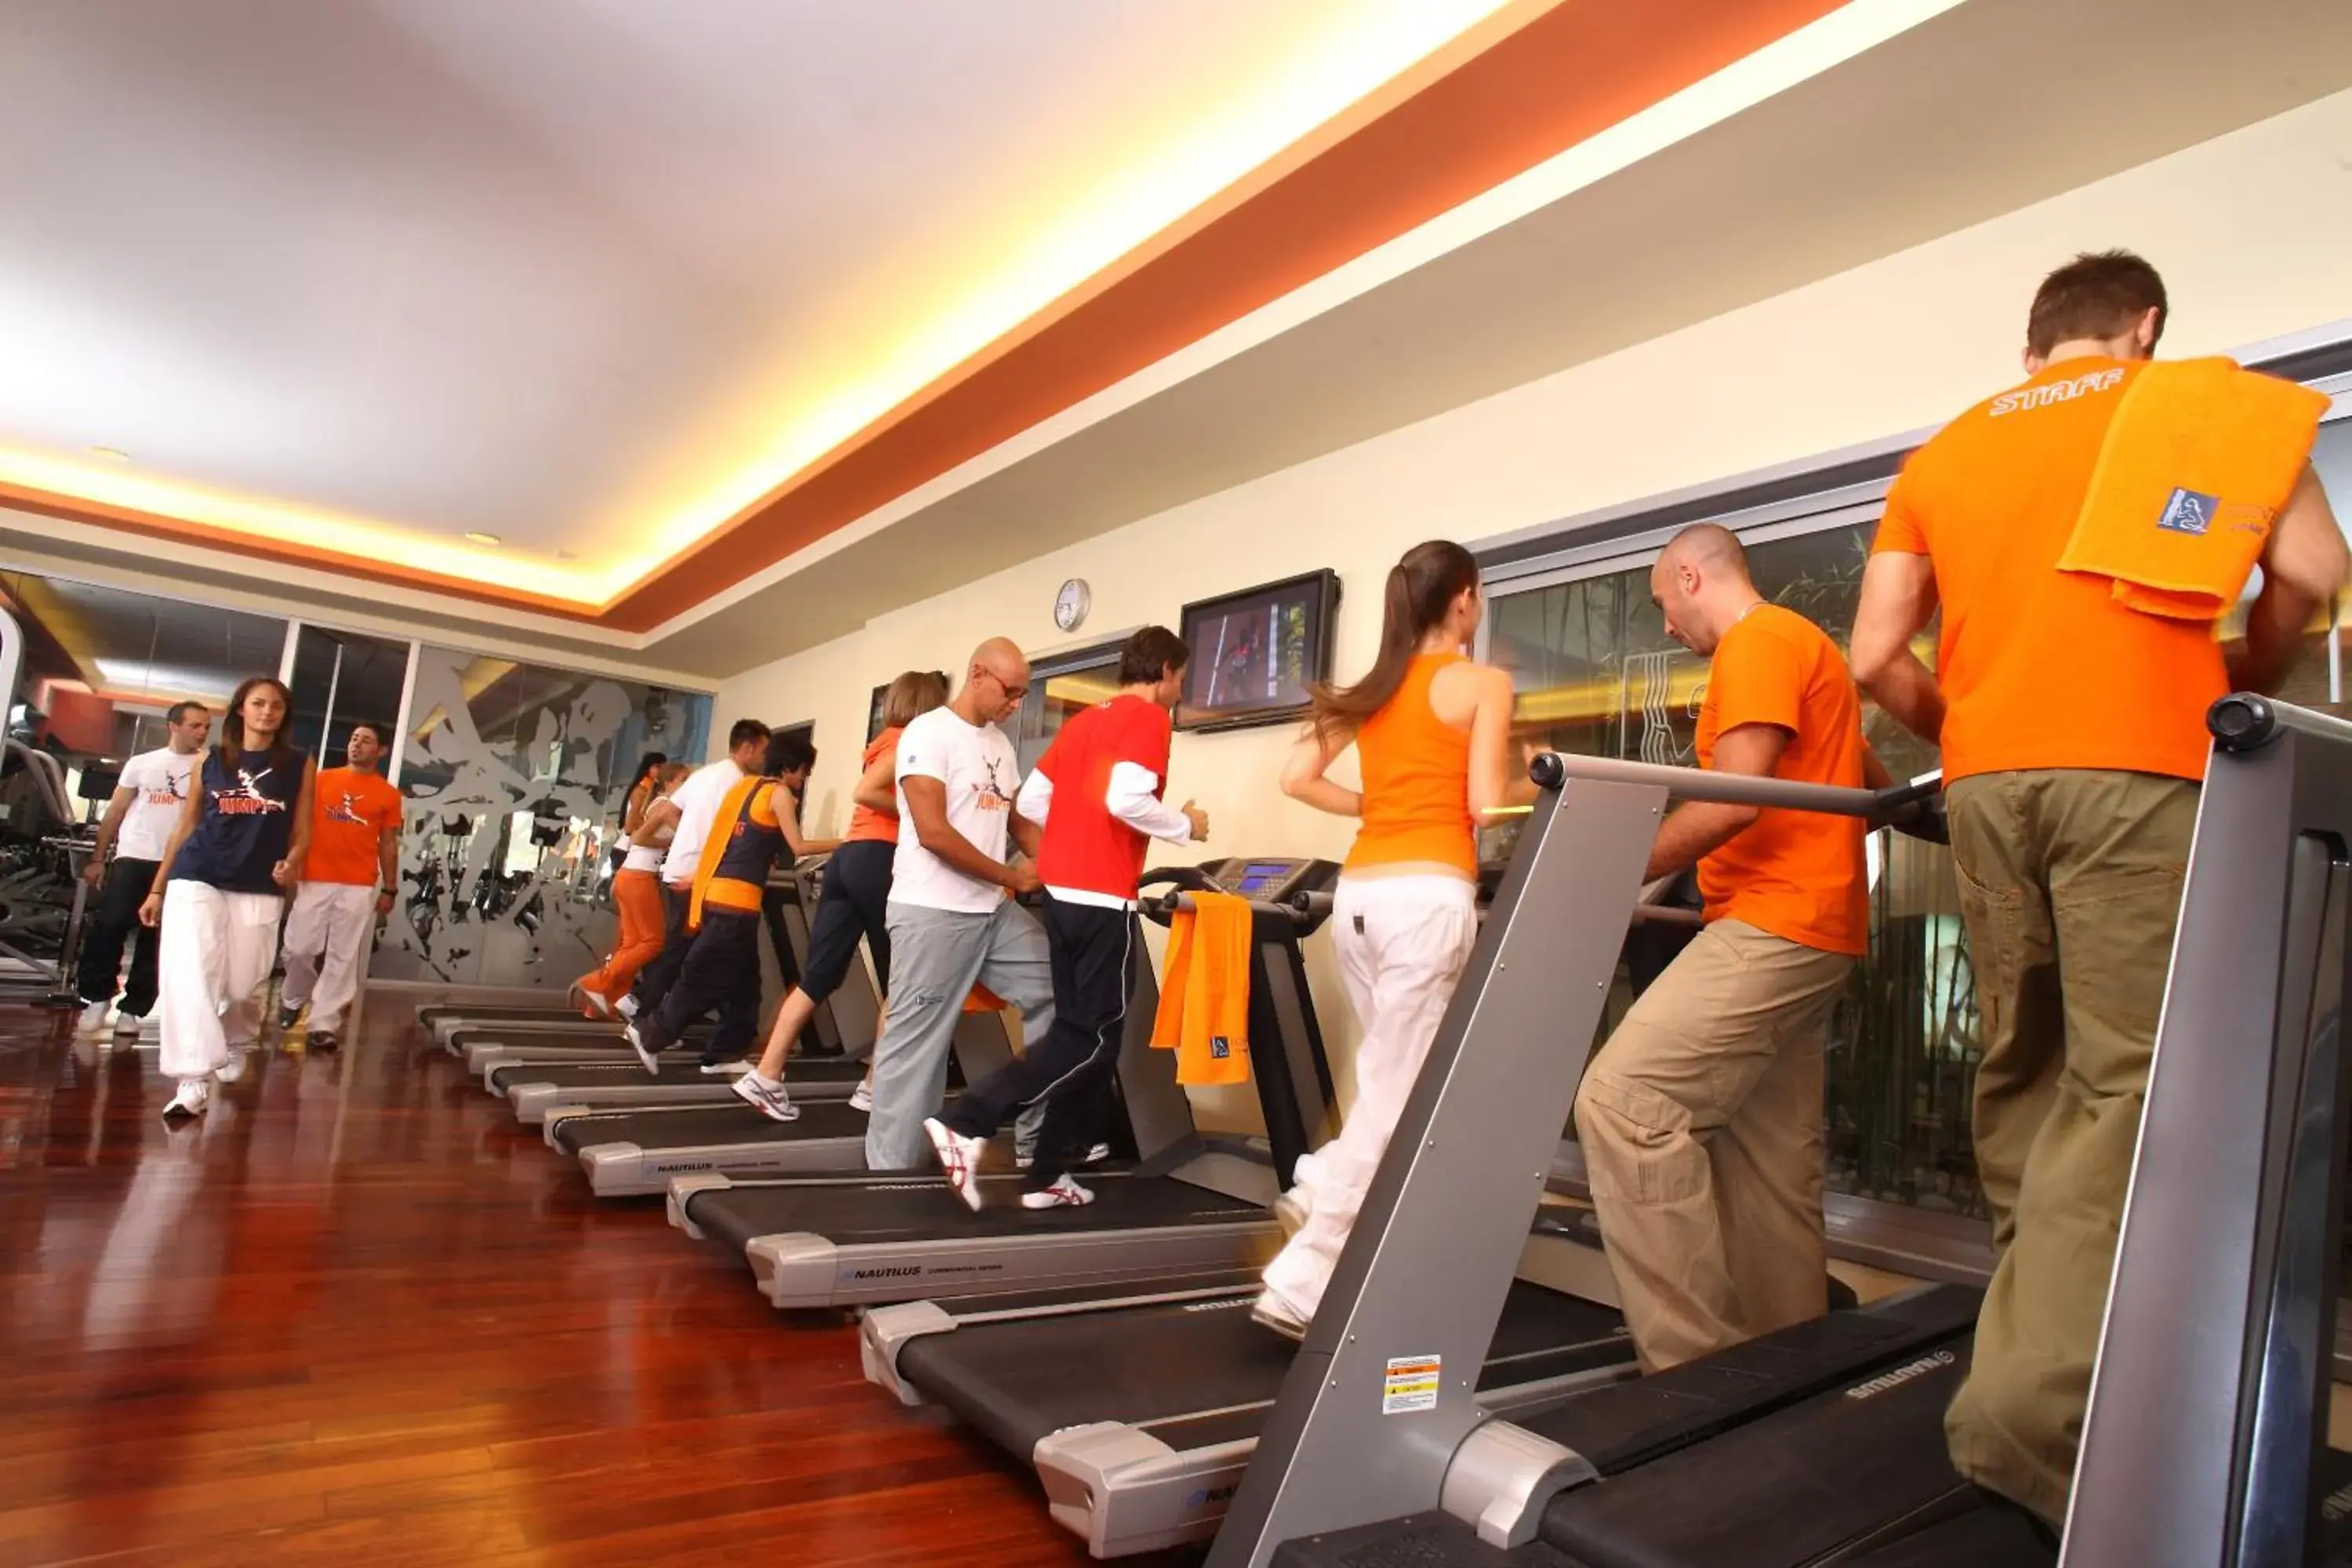 Fitness centre/facilities, Fitness Center/Facilities in Hotel Fontana Olente